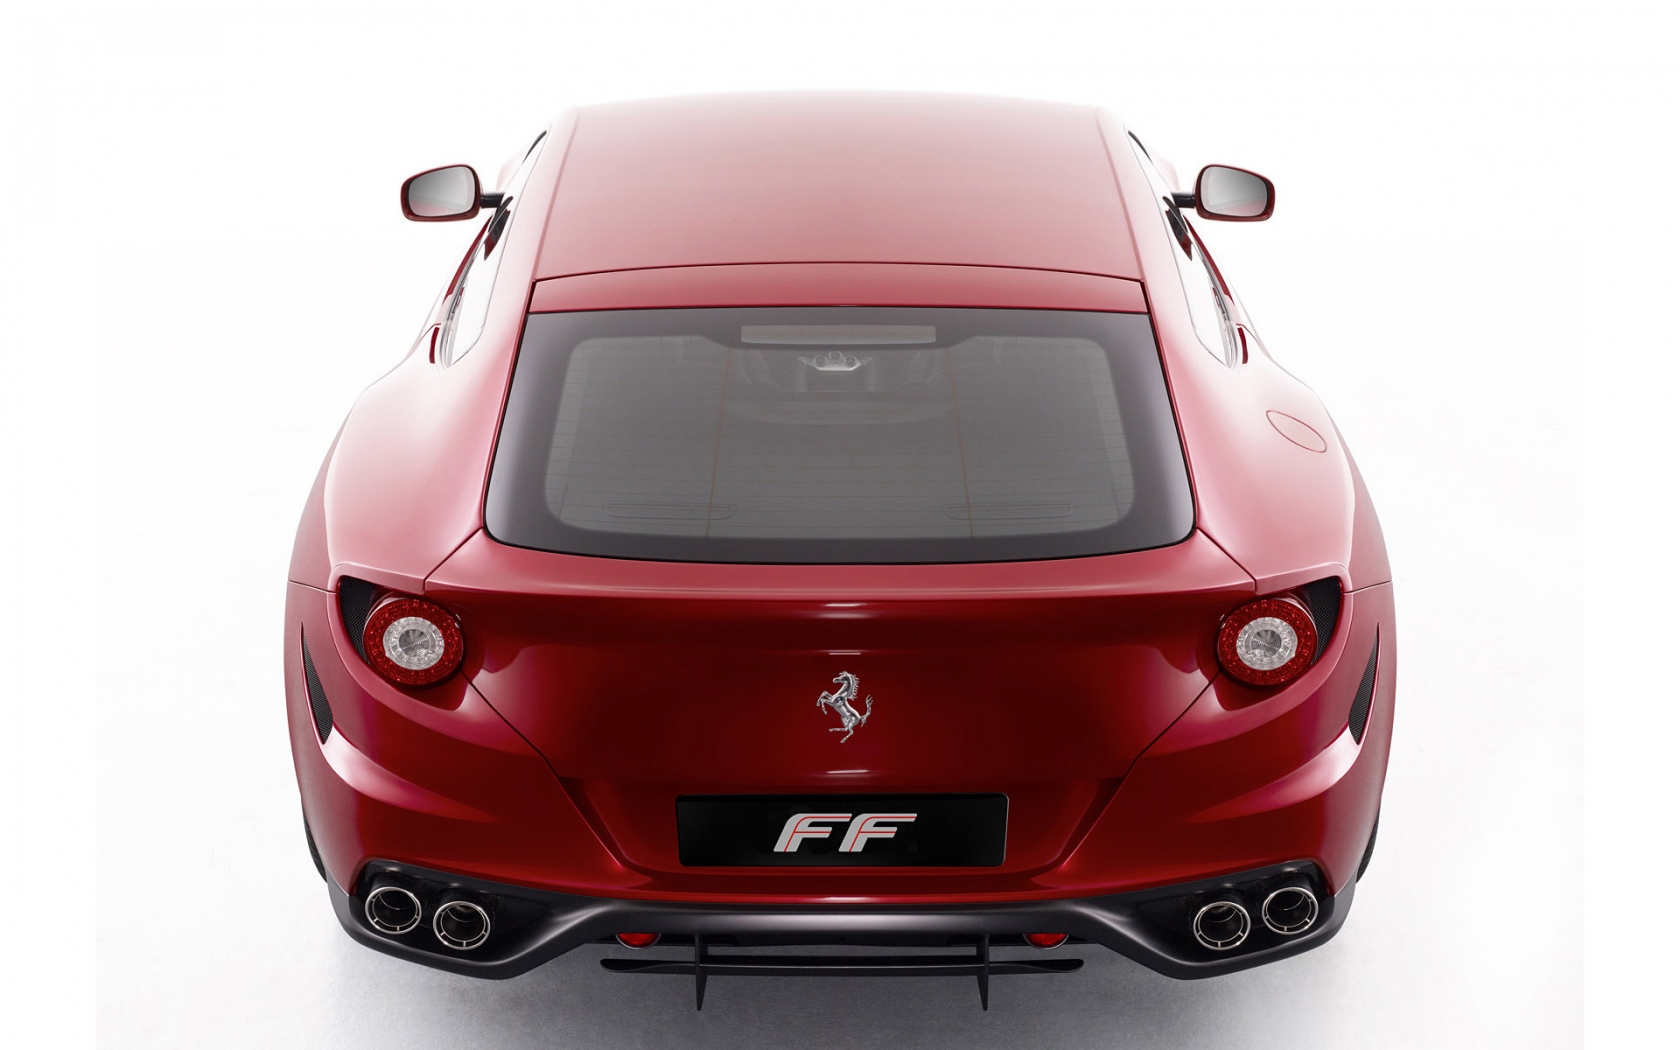 Ferrari FF Rear for 1680 x 1050 widescreen resolution